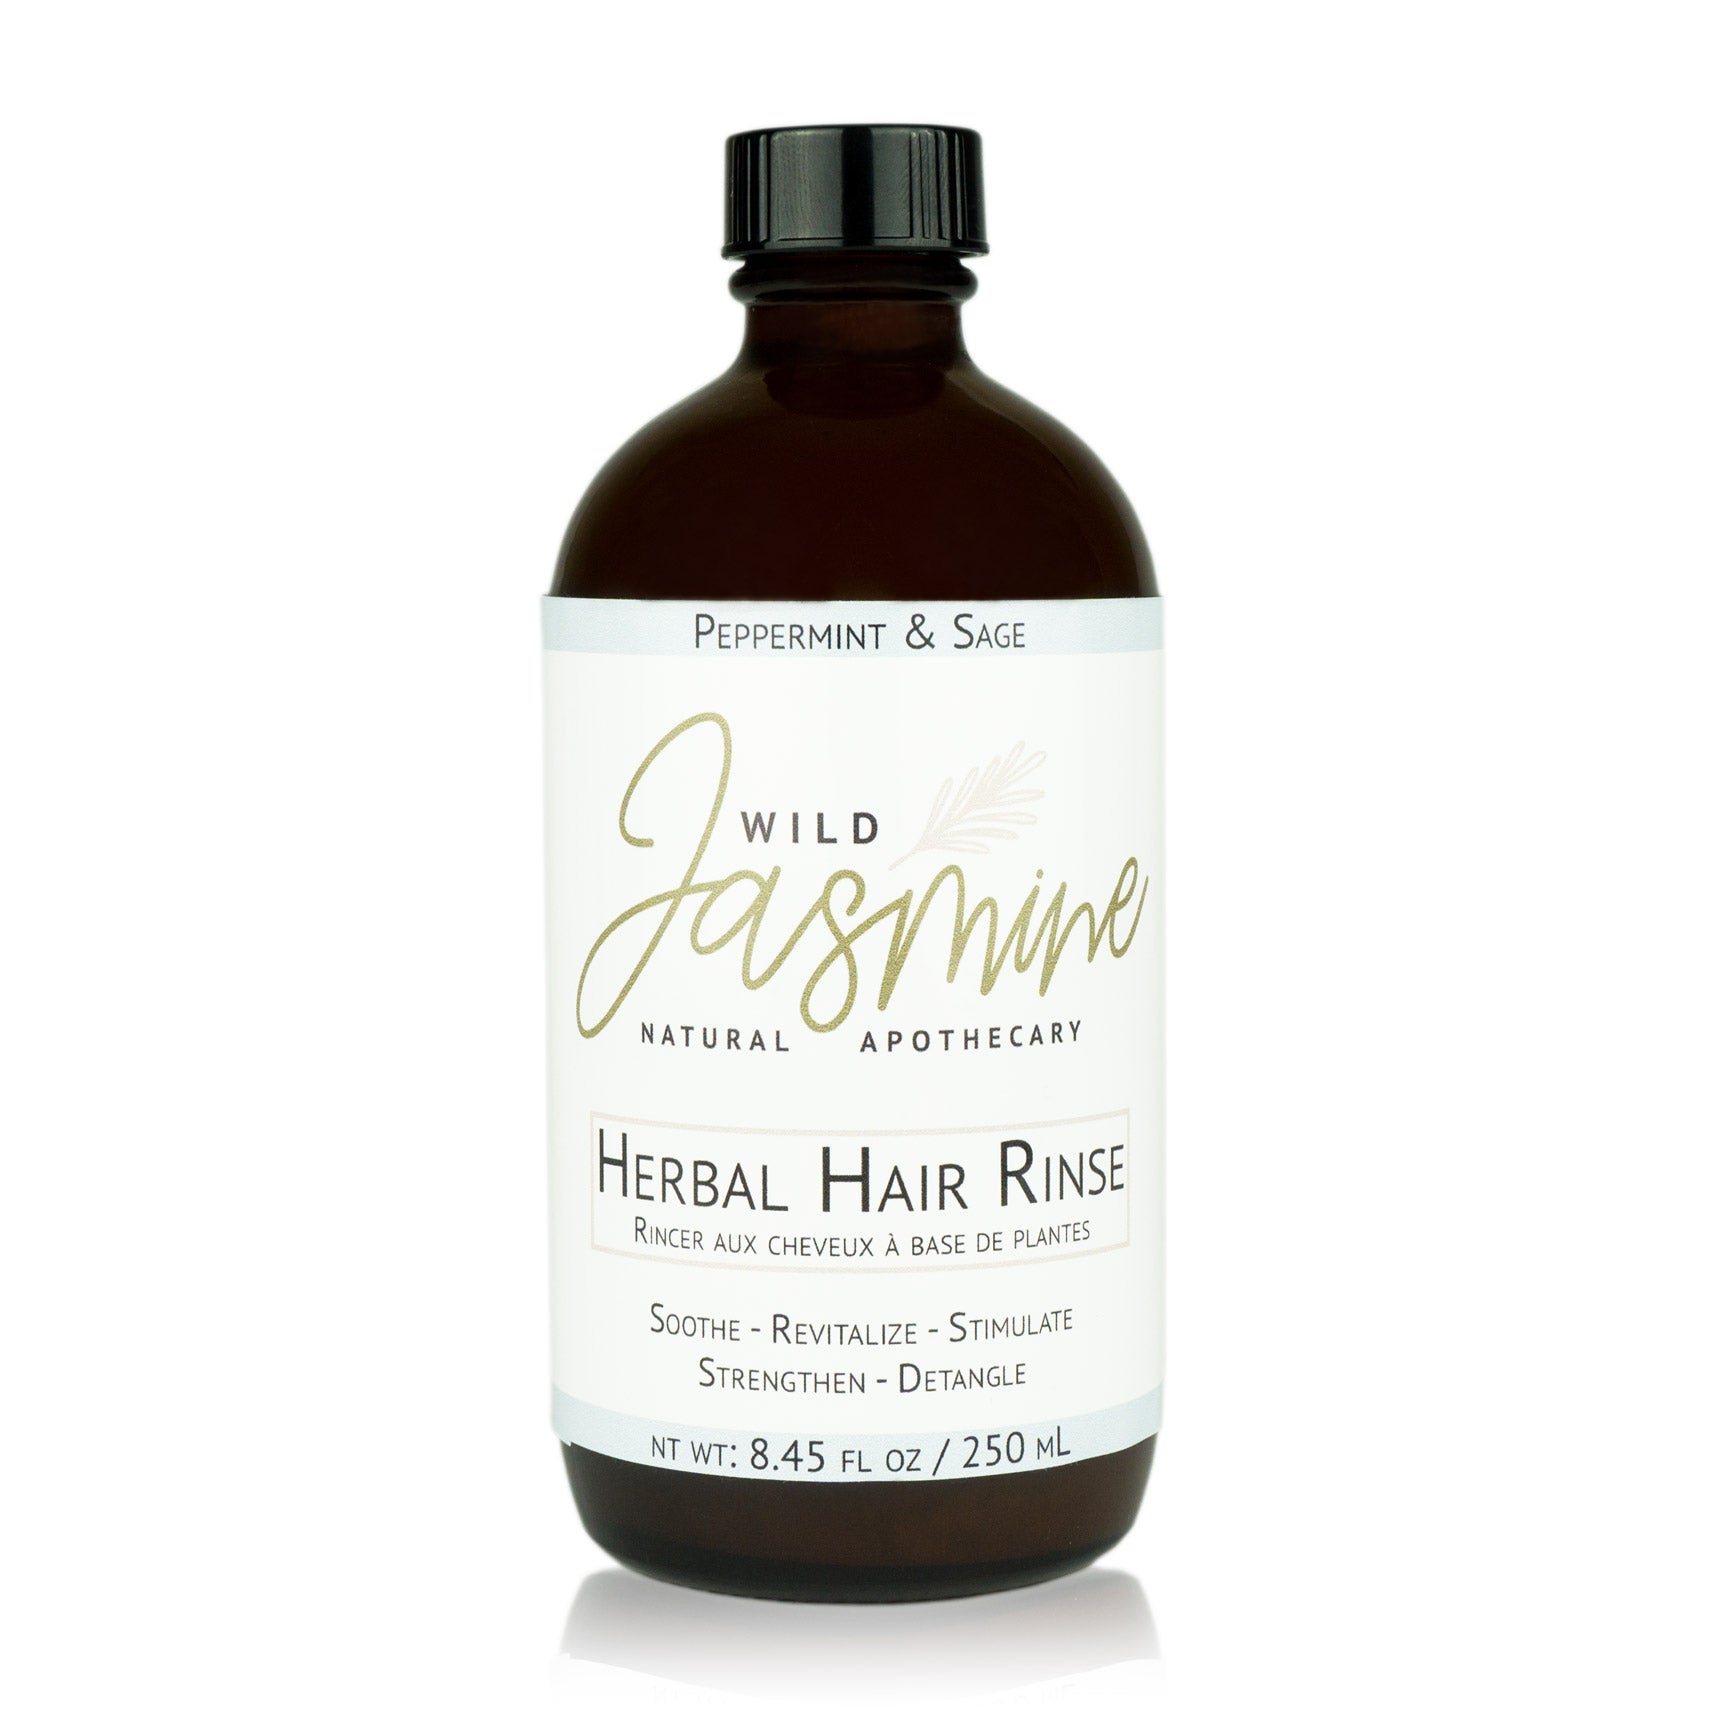 Herbal Hair Rinse - Abbey Lane Farm 